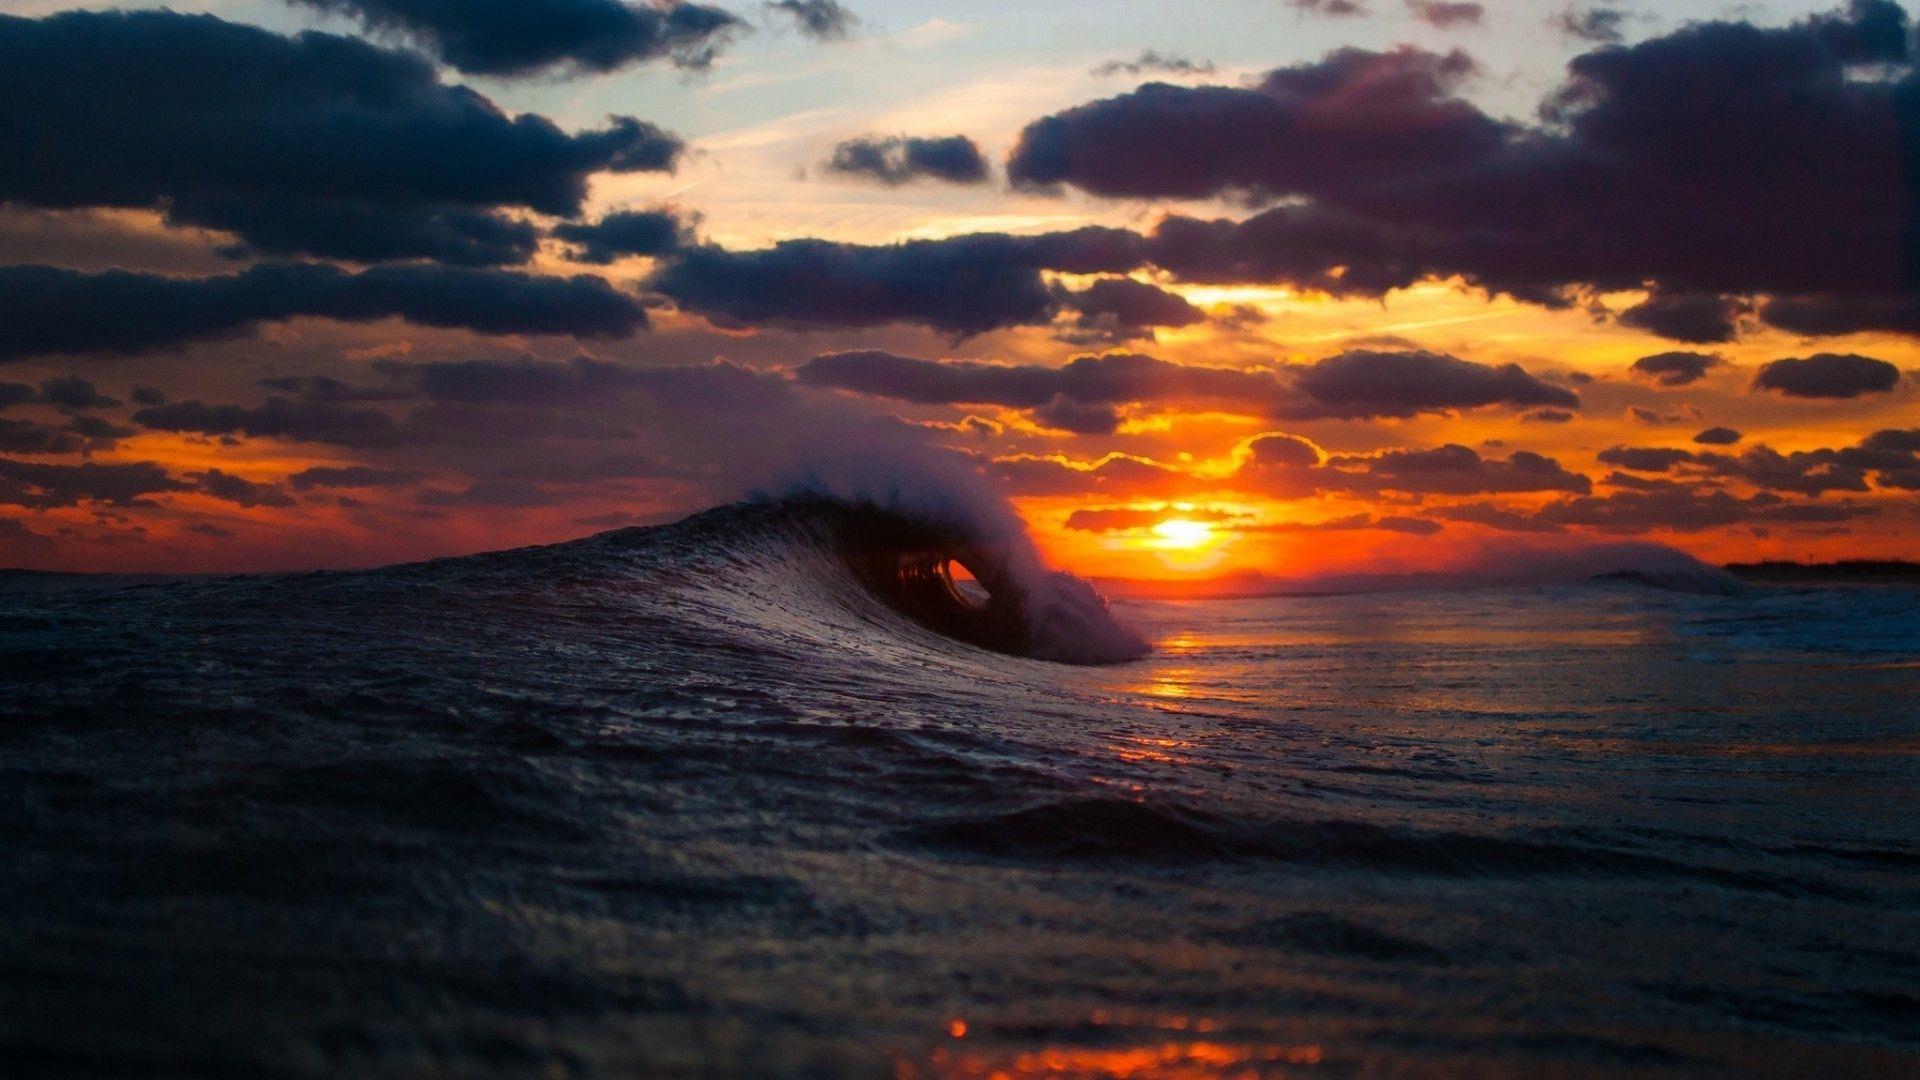 Download Wallpaper 1920x1080 sea, surf, wave, sunset Full HD 1080p